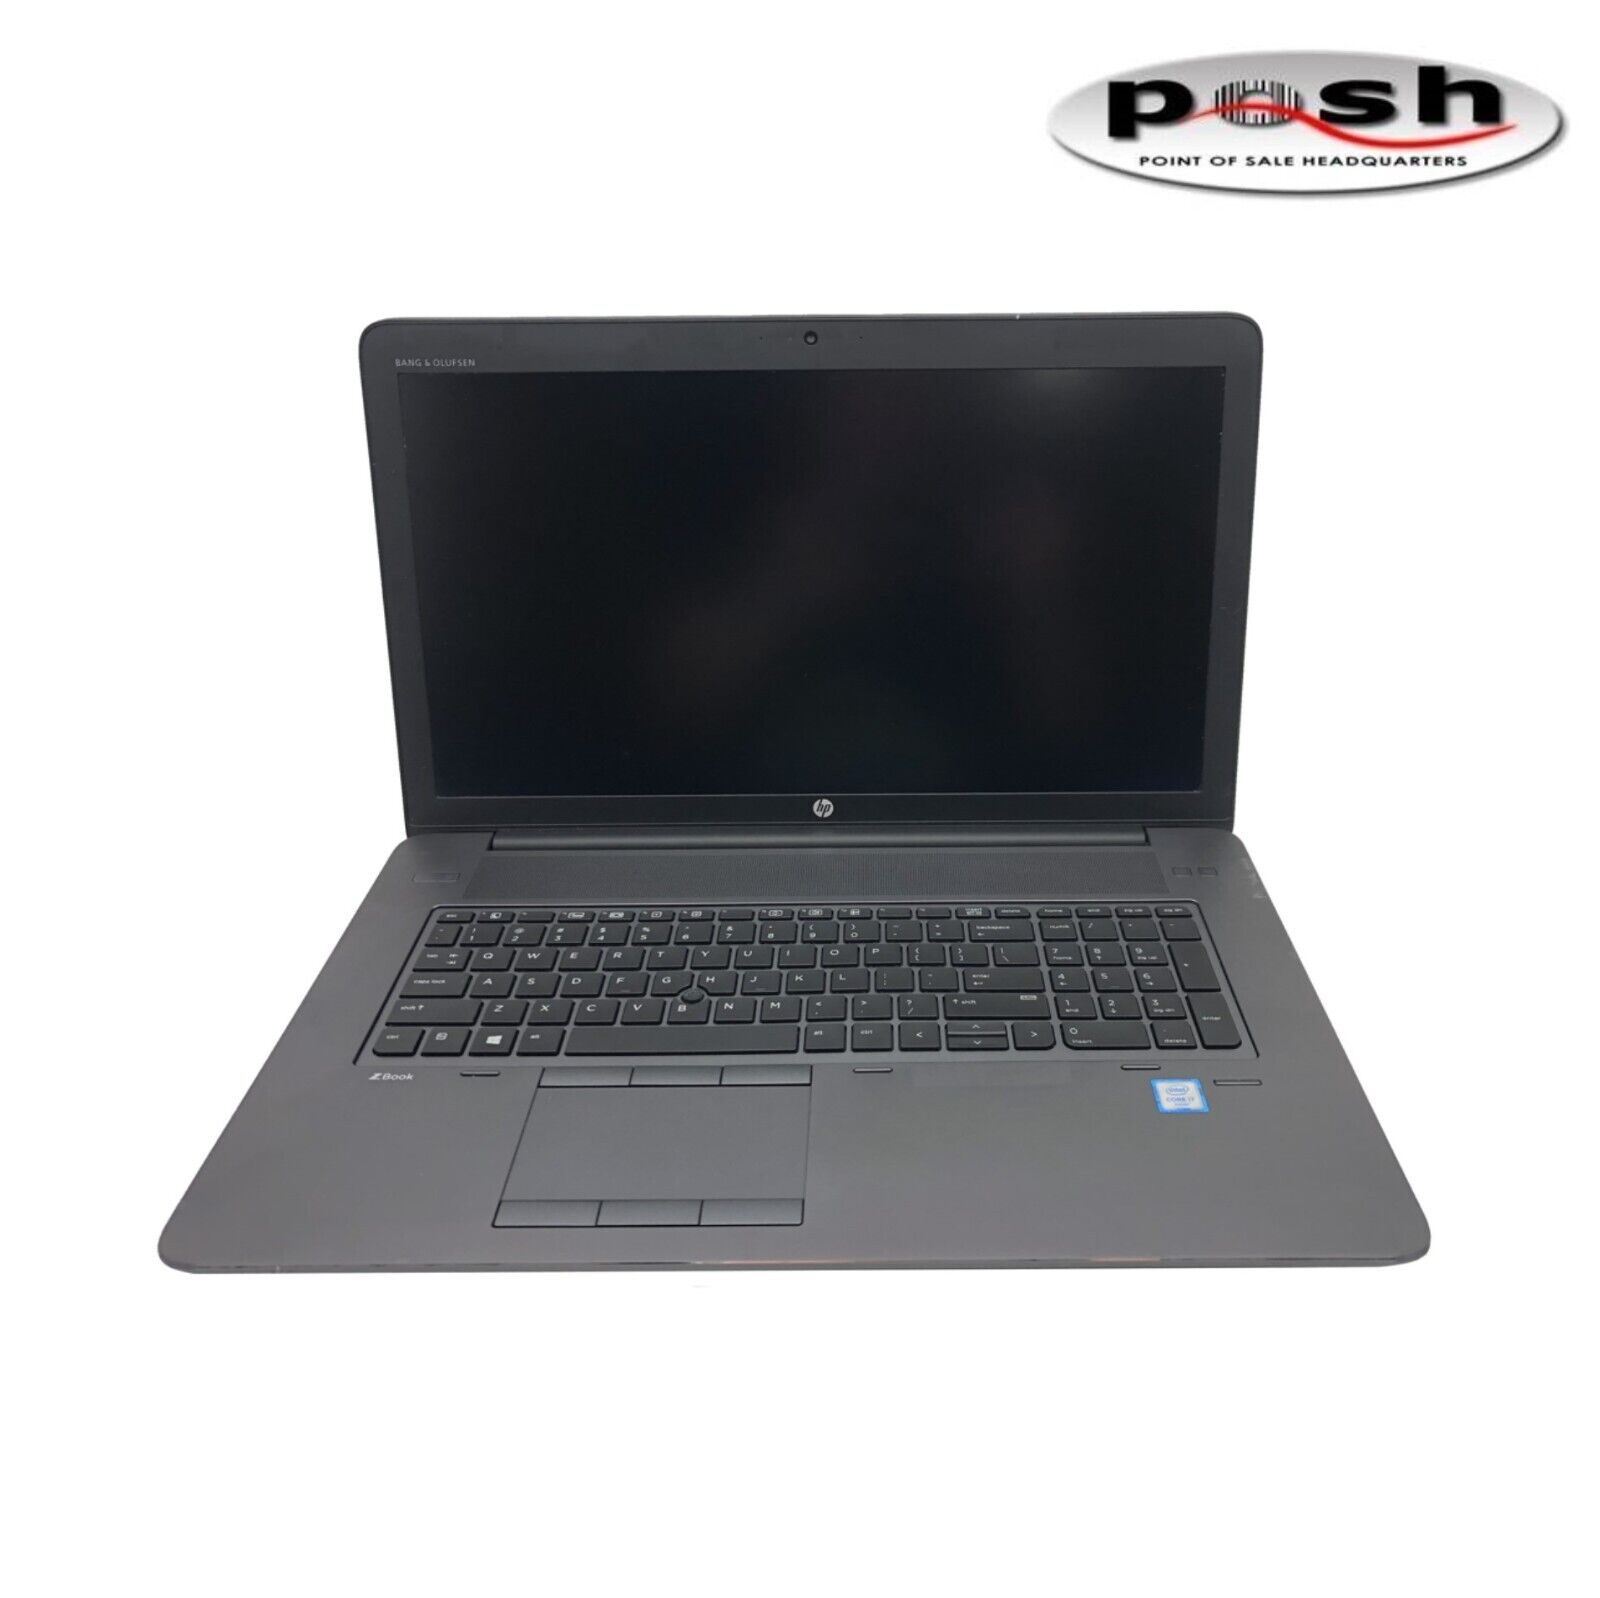 HP ZBook 17 G3 i7-6700 Laptop